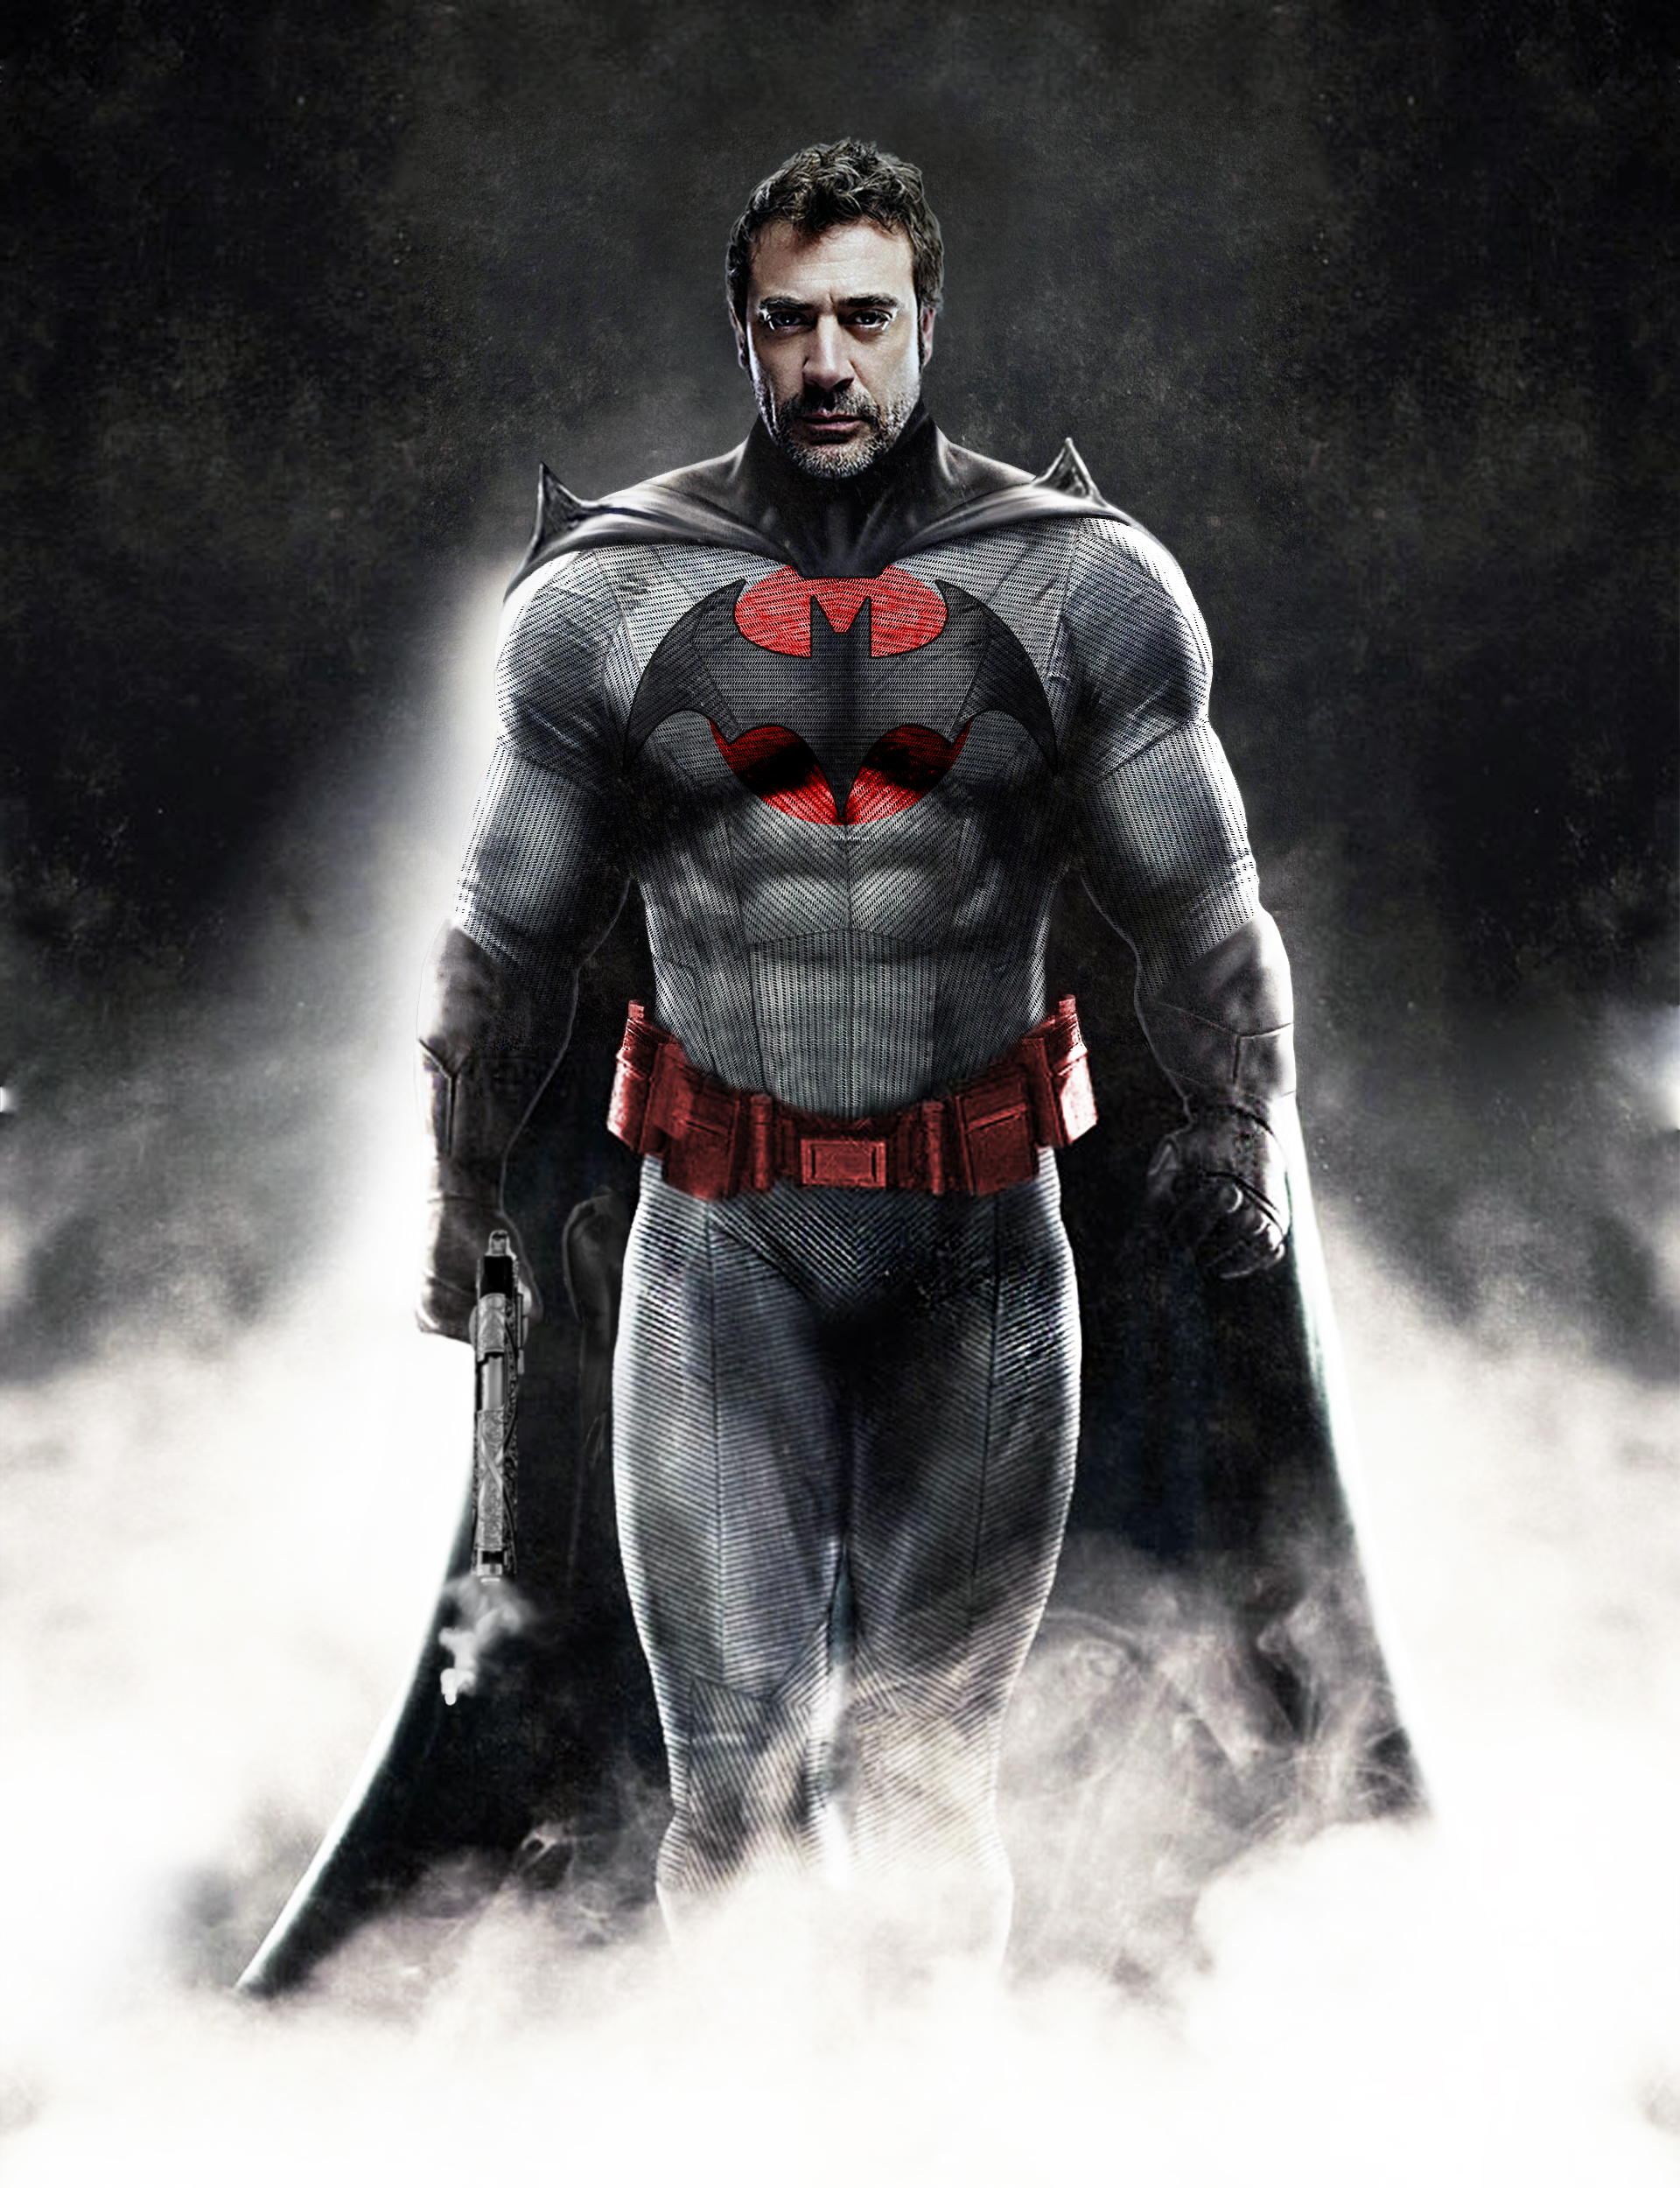 Jeffrey Dean Morgan as Batman